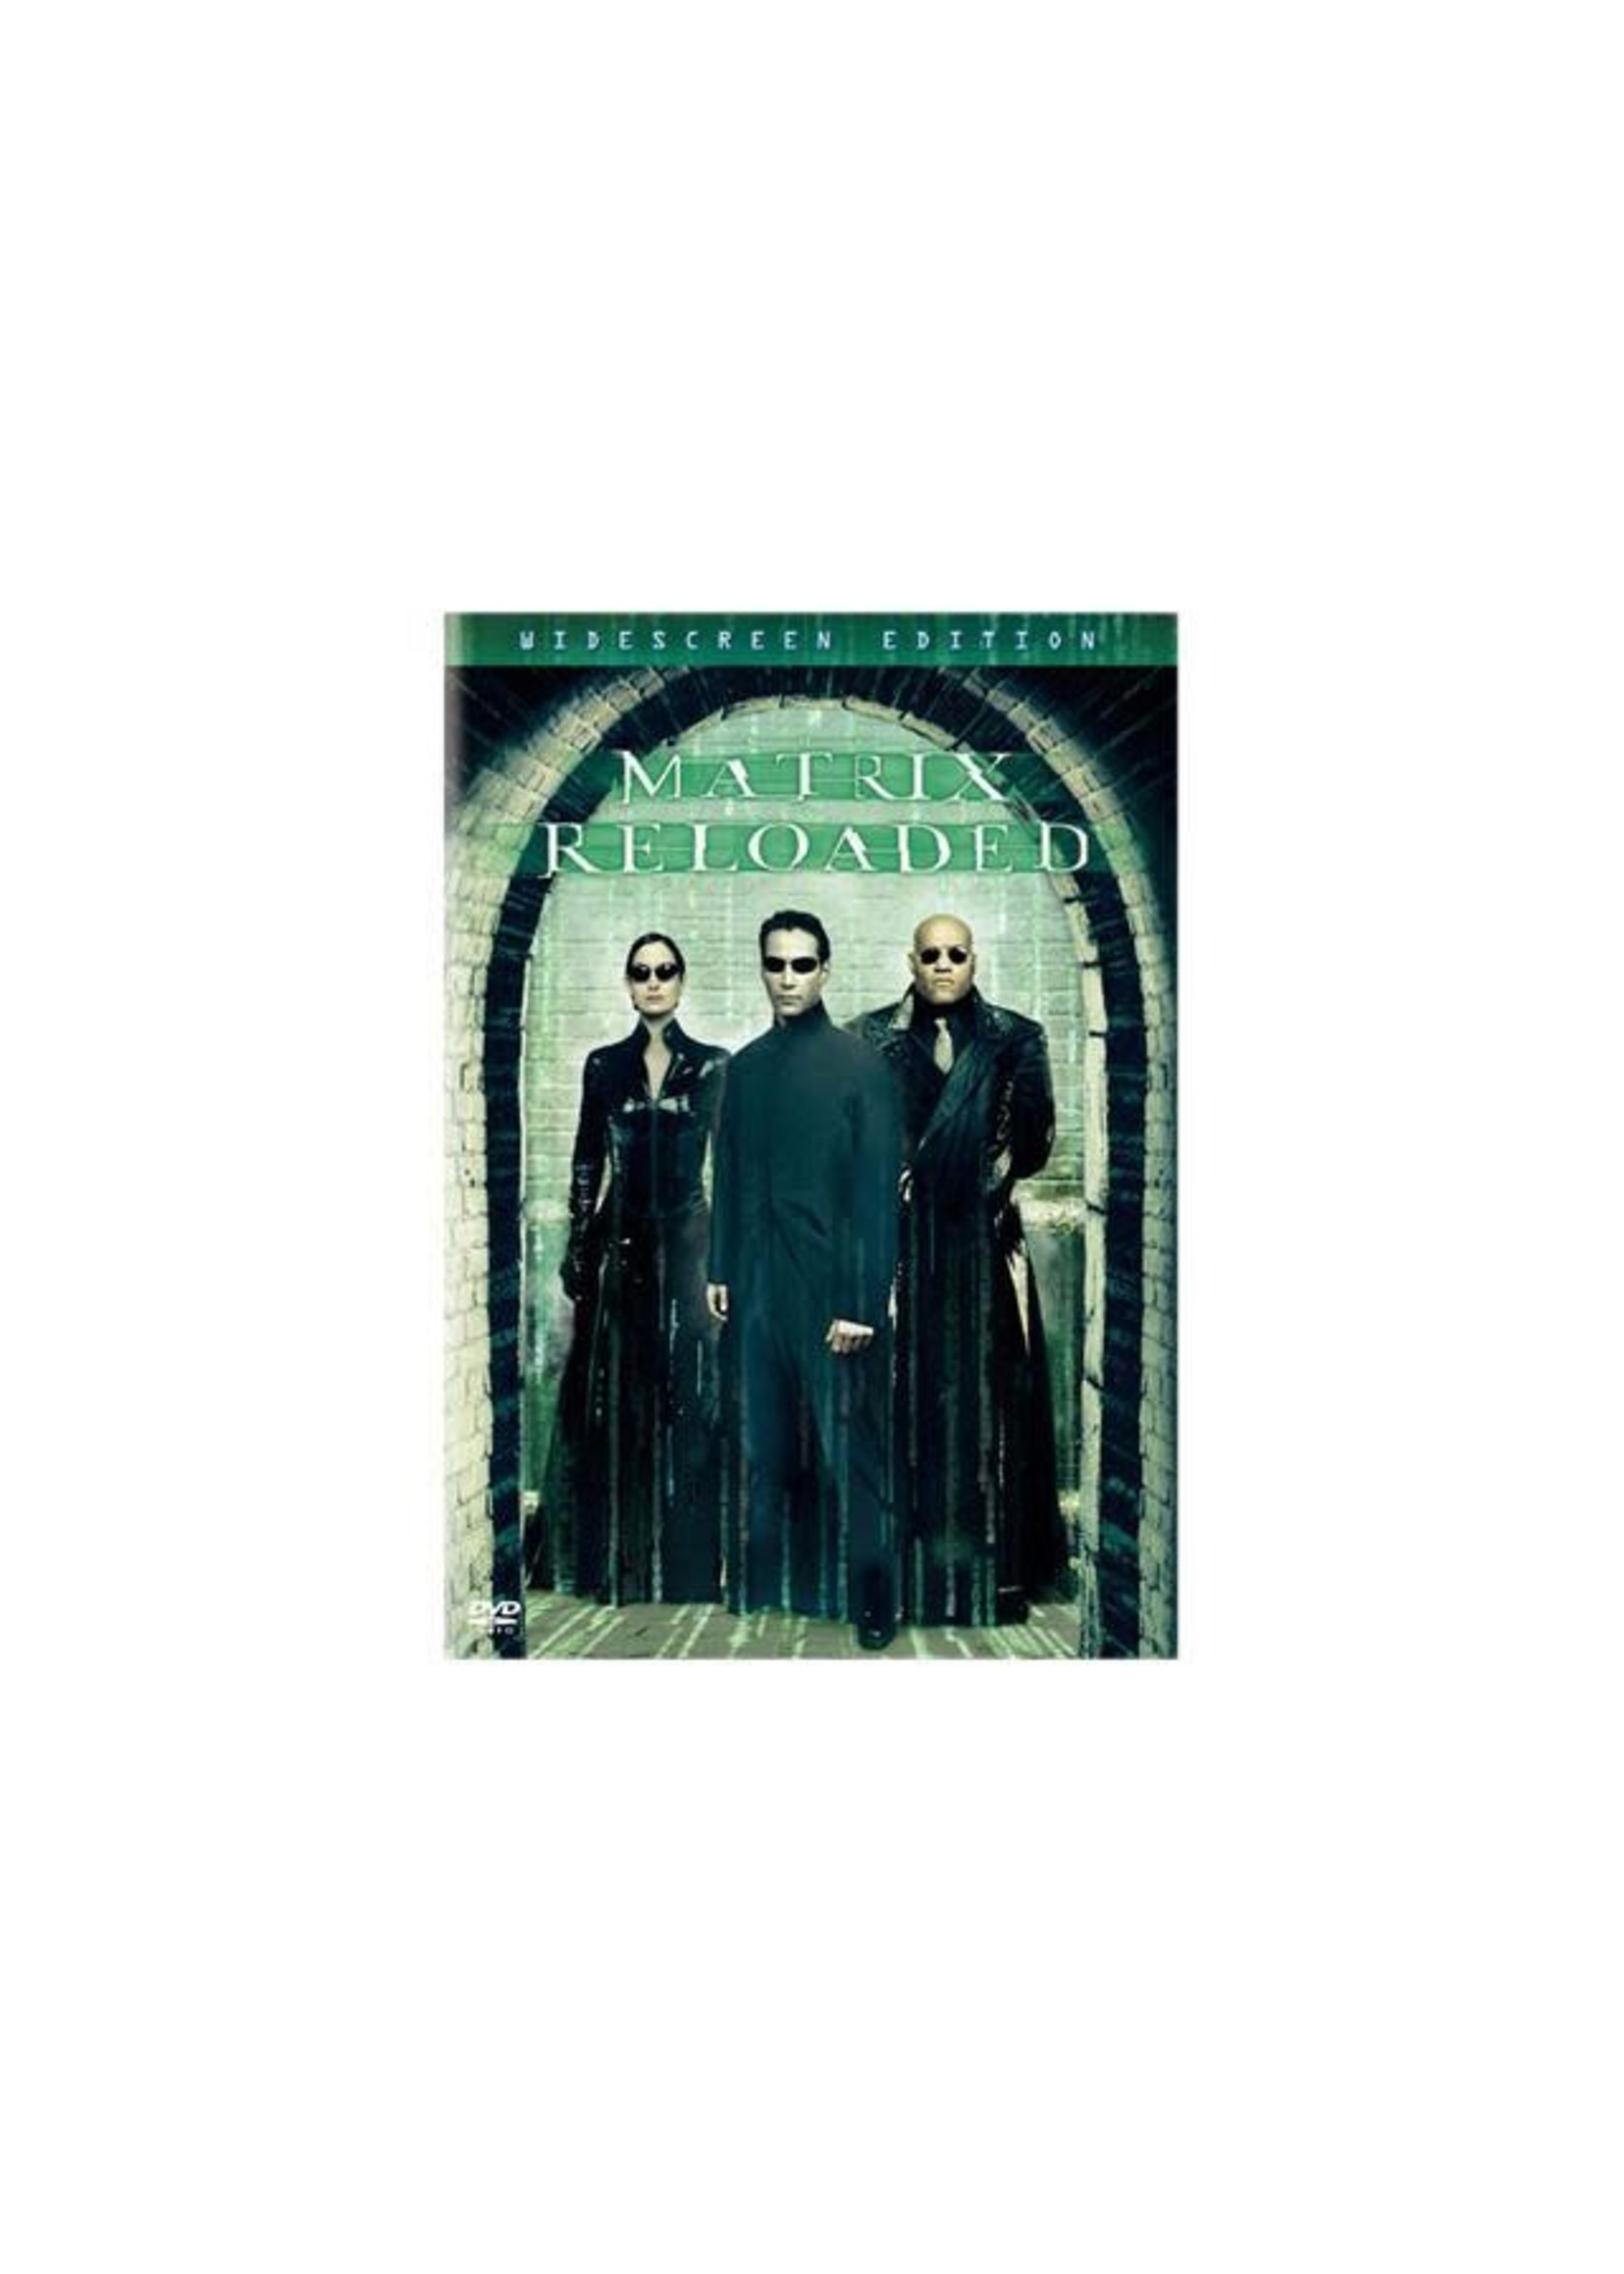 The Matrix Reloaded DVD